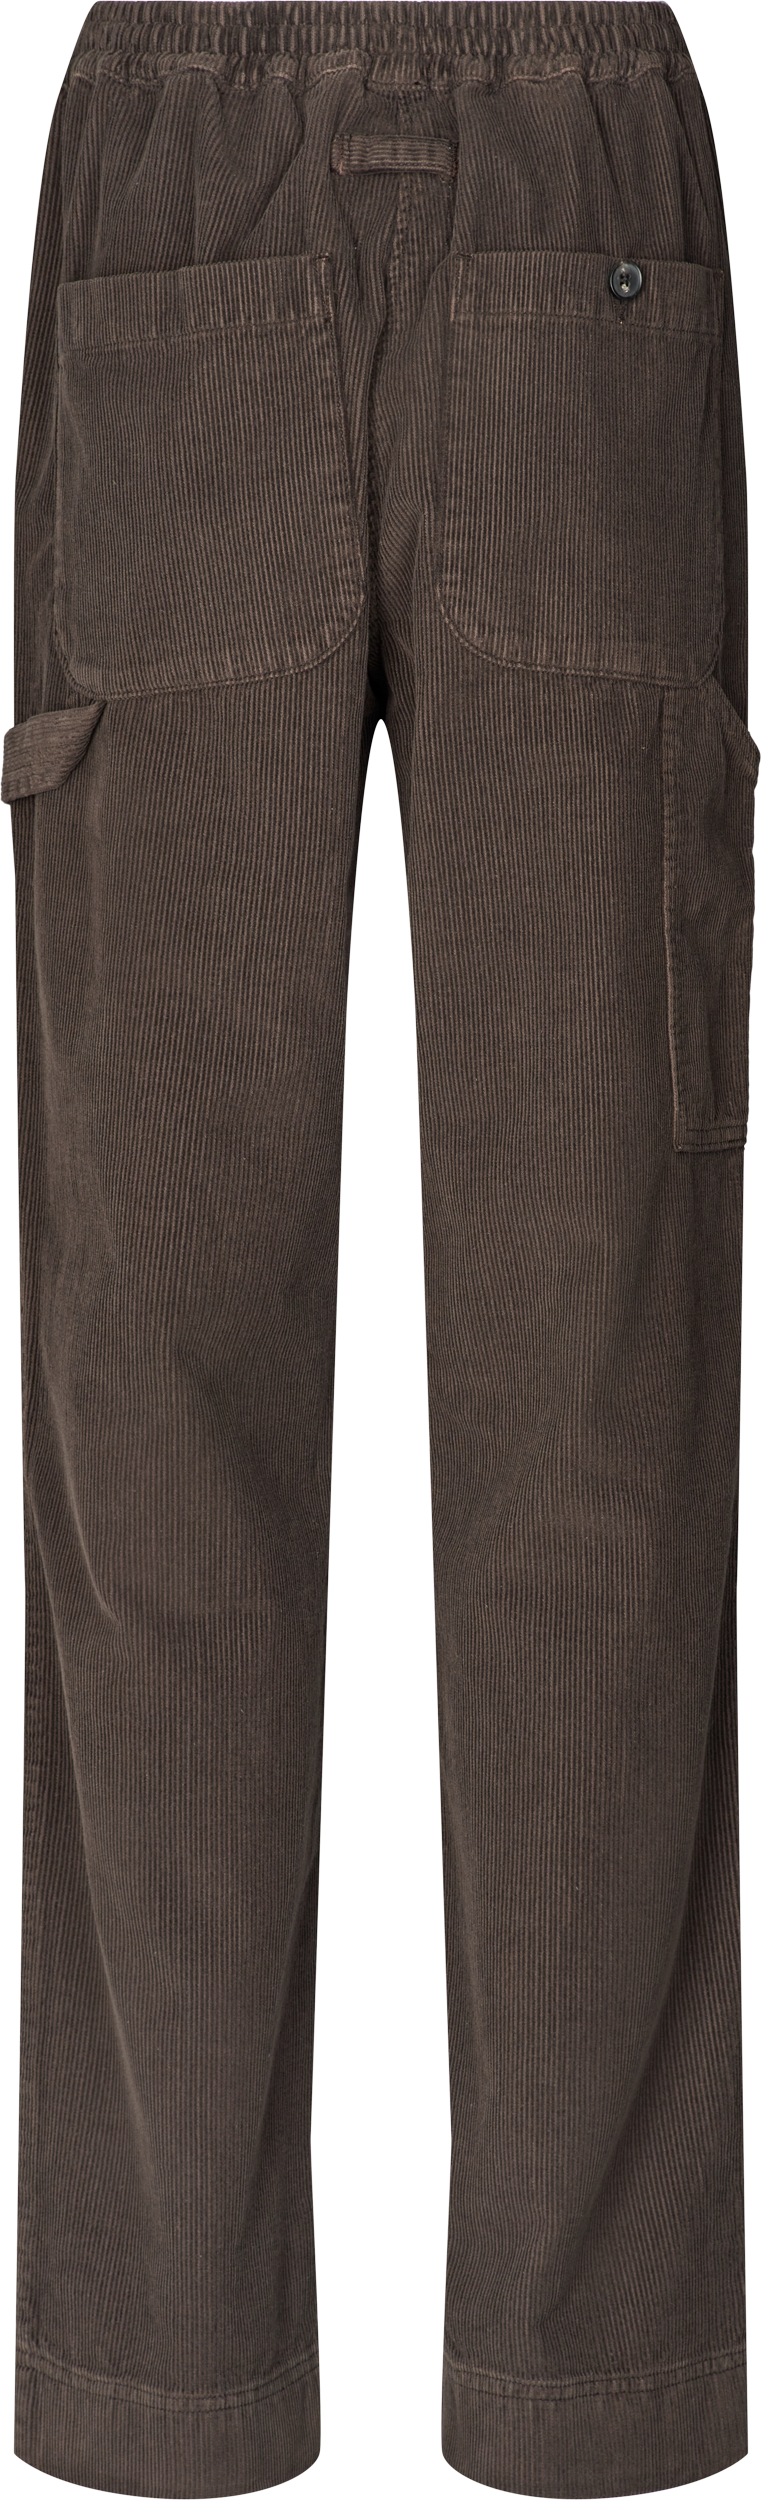 GAI+LISVA Alice02 Corduroy Pant Pants & Shorts 681 Mulch